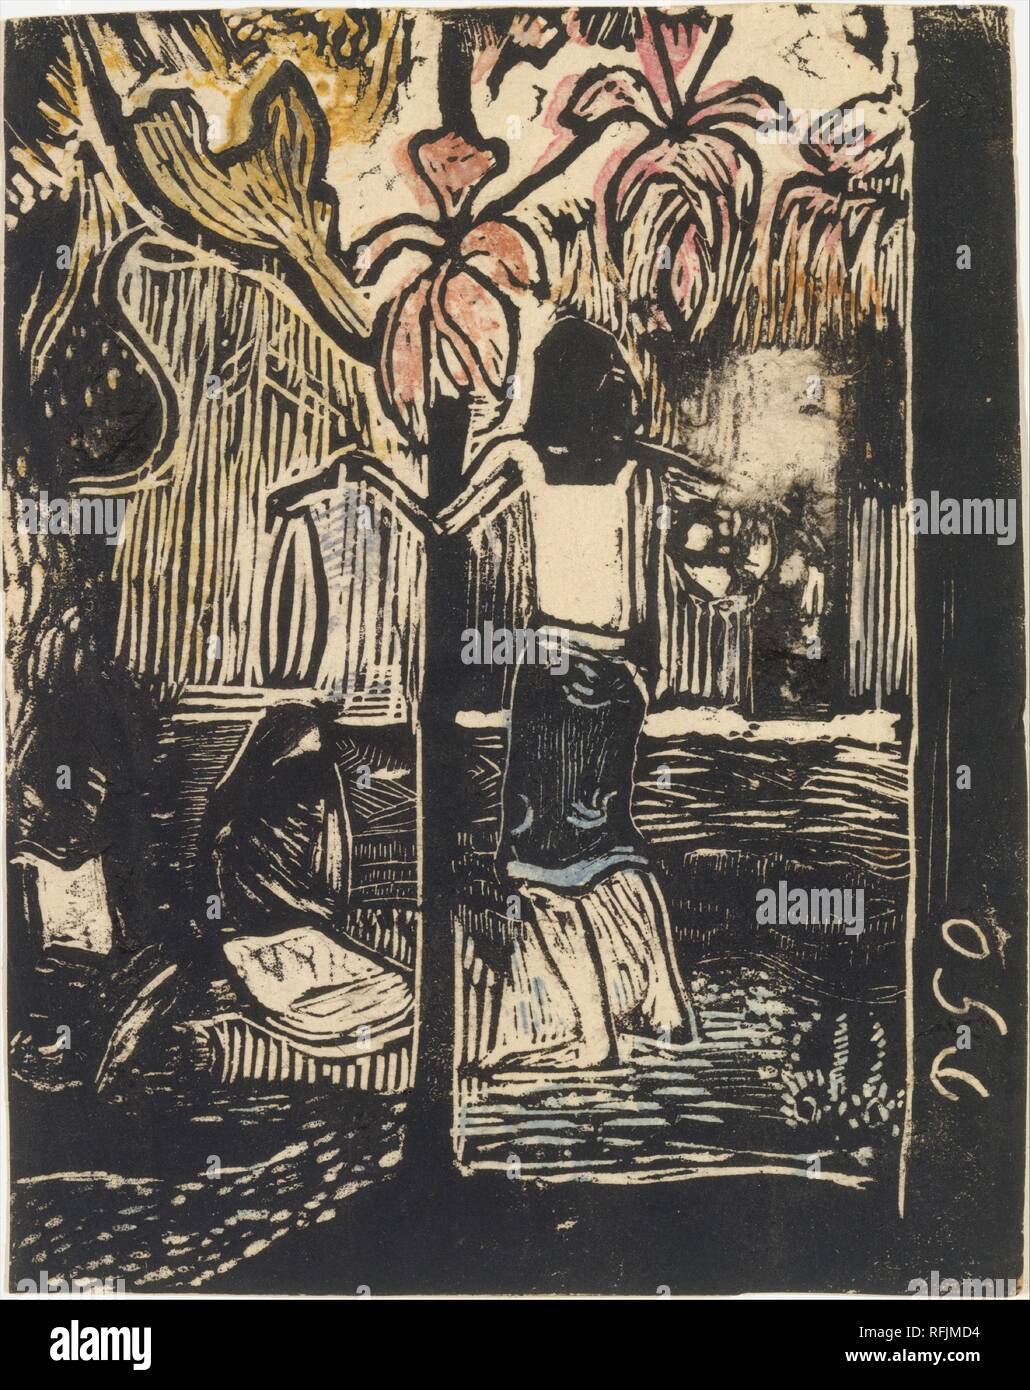 Duft (Noa Noa), kleinen Block. Artist: Paul Gauguin (Französisch, Paris 1848-1903 Atuona, Hiva Oa, Marquesas Inseln). Maße: Blatt: 5 15/16 x 4 5/8 in. (15,1 x 11,7 cm). Datum: 1894-95. Museum: Metropolitan Museum of Art, New York, USA. Stockfoto